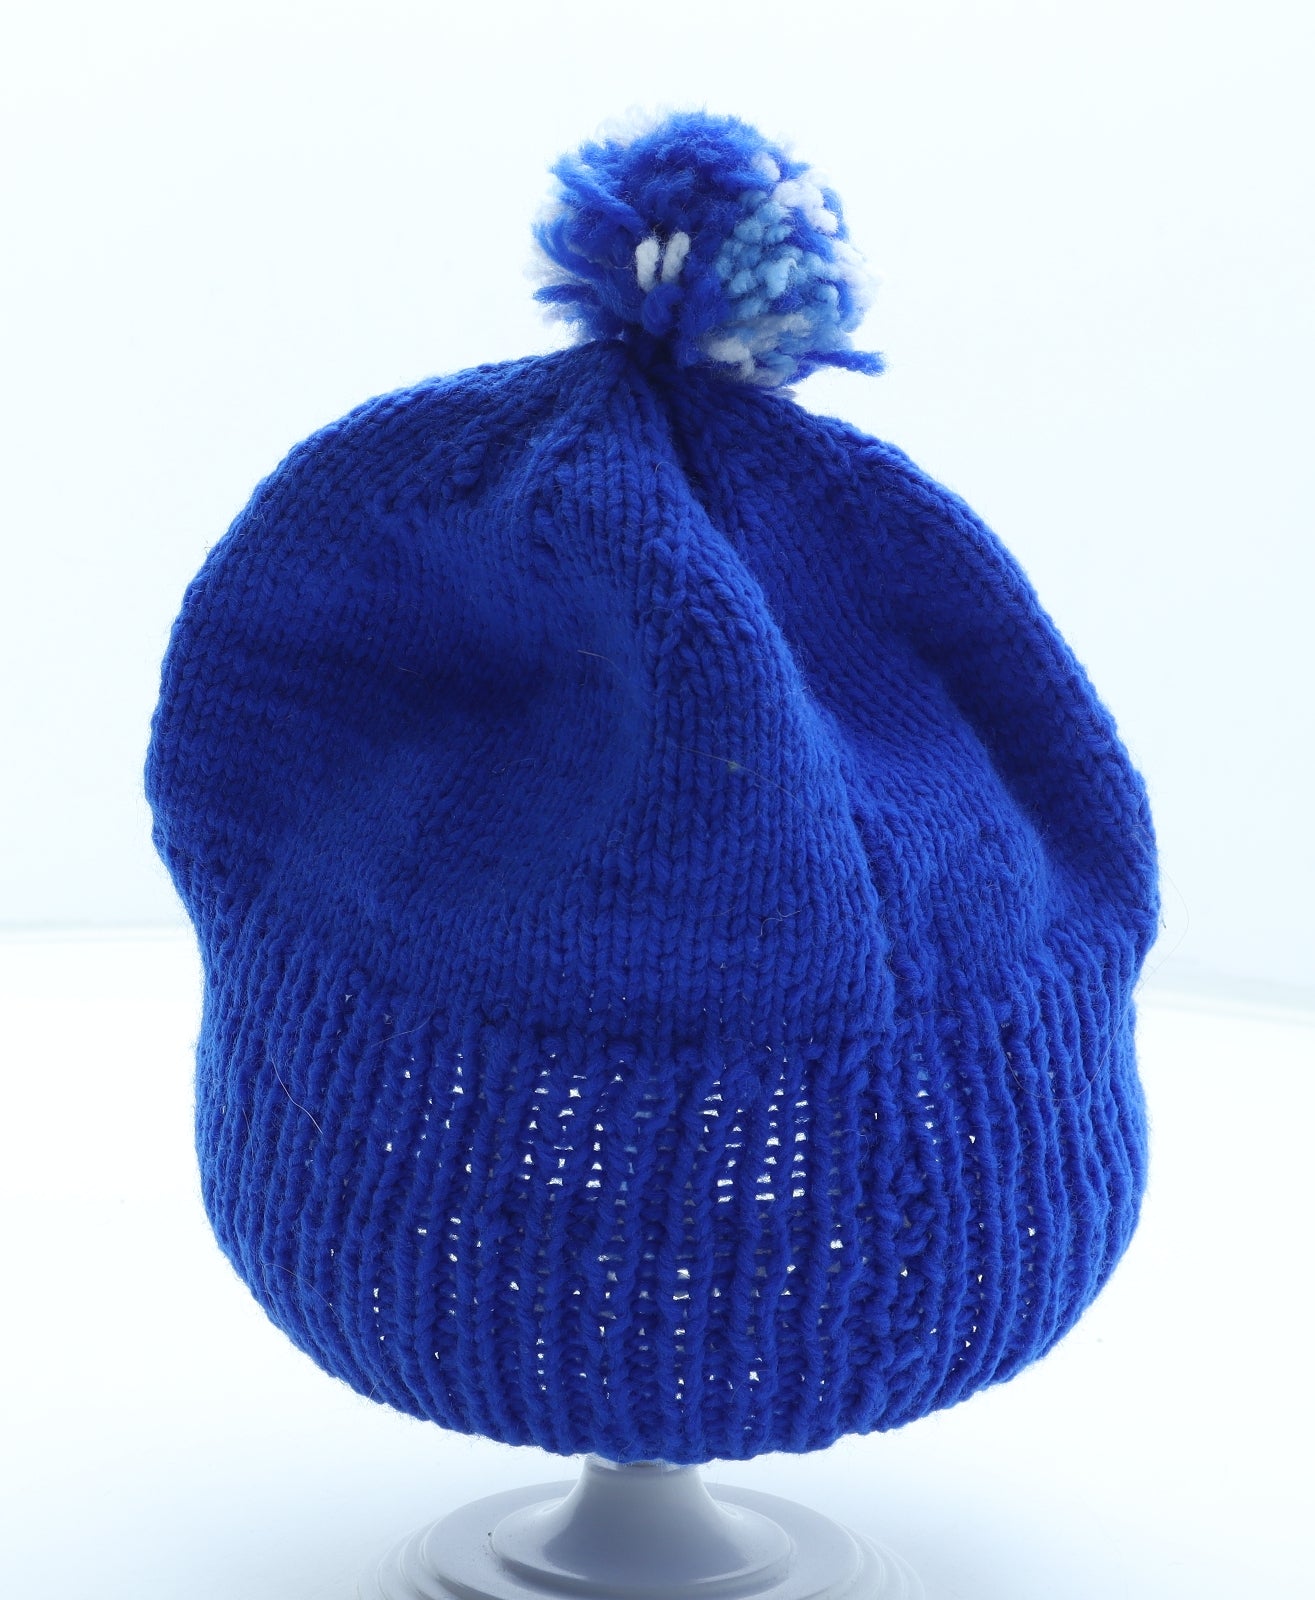 Preworn Boys Blue Acrylic Bobble Hat One Size